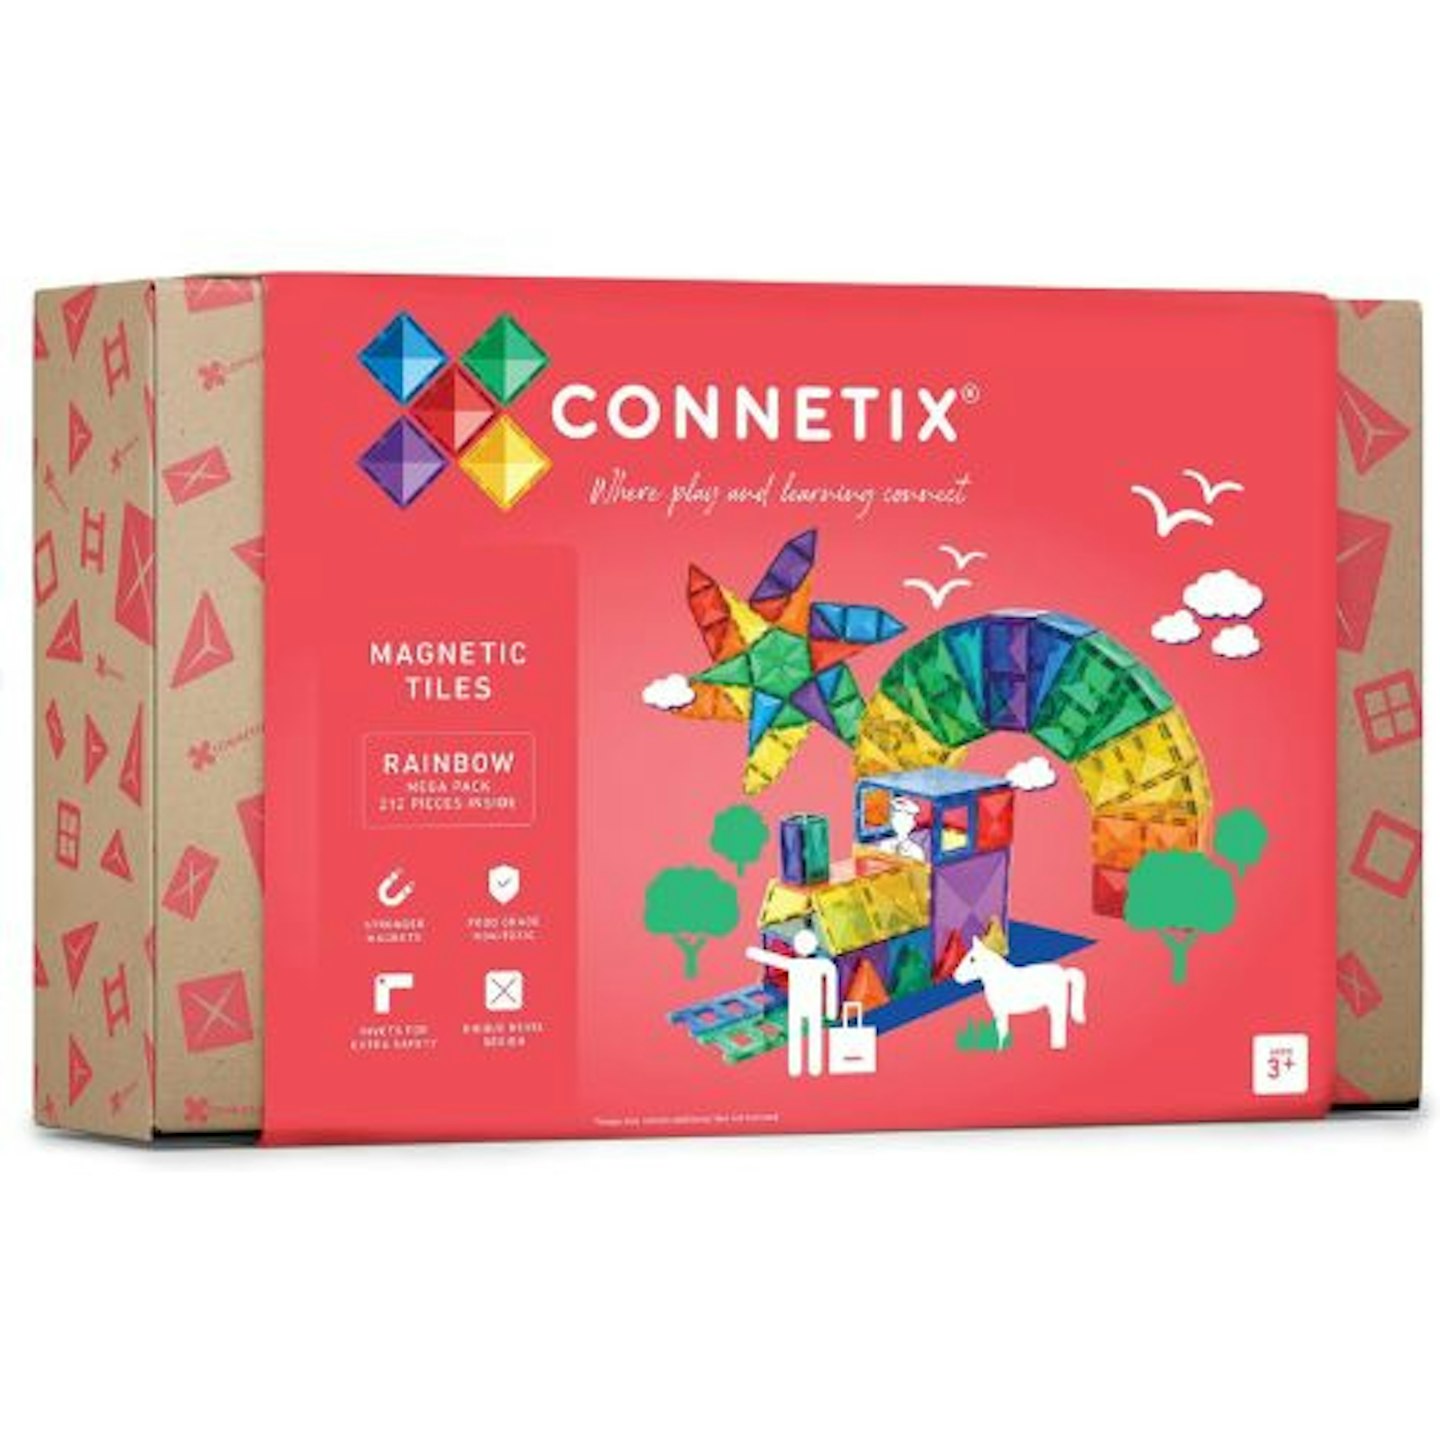 CONNETIX Rainbow Mega Pack